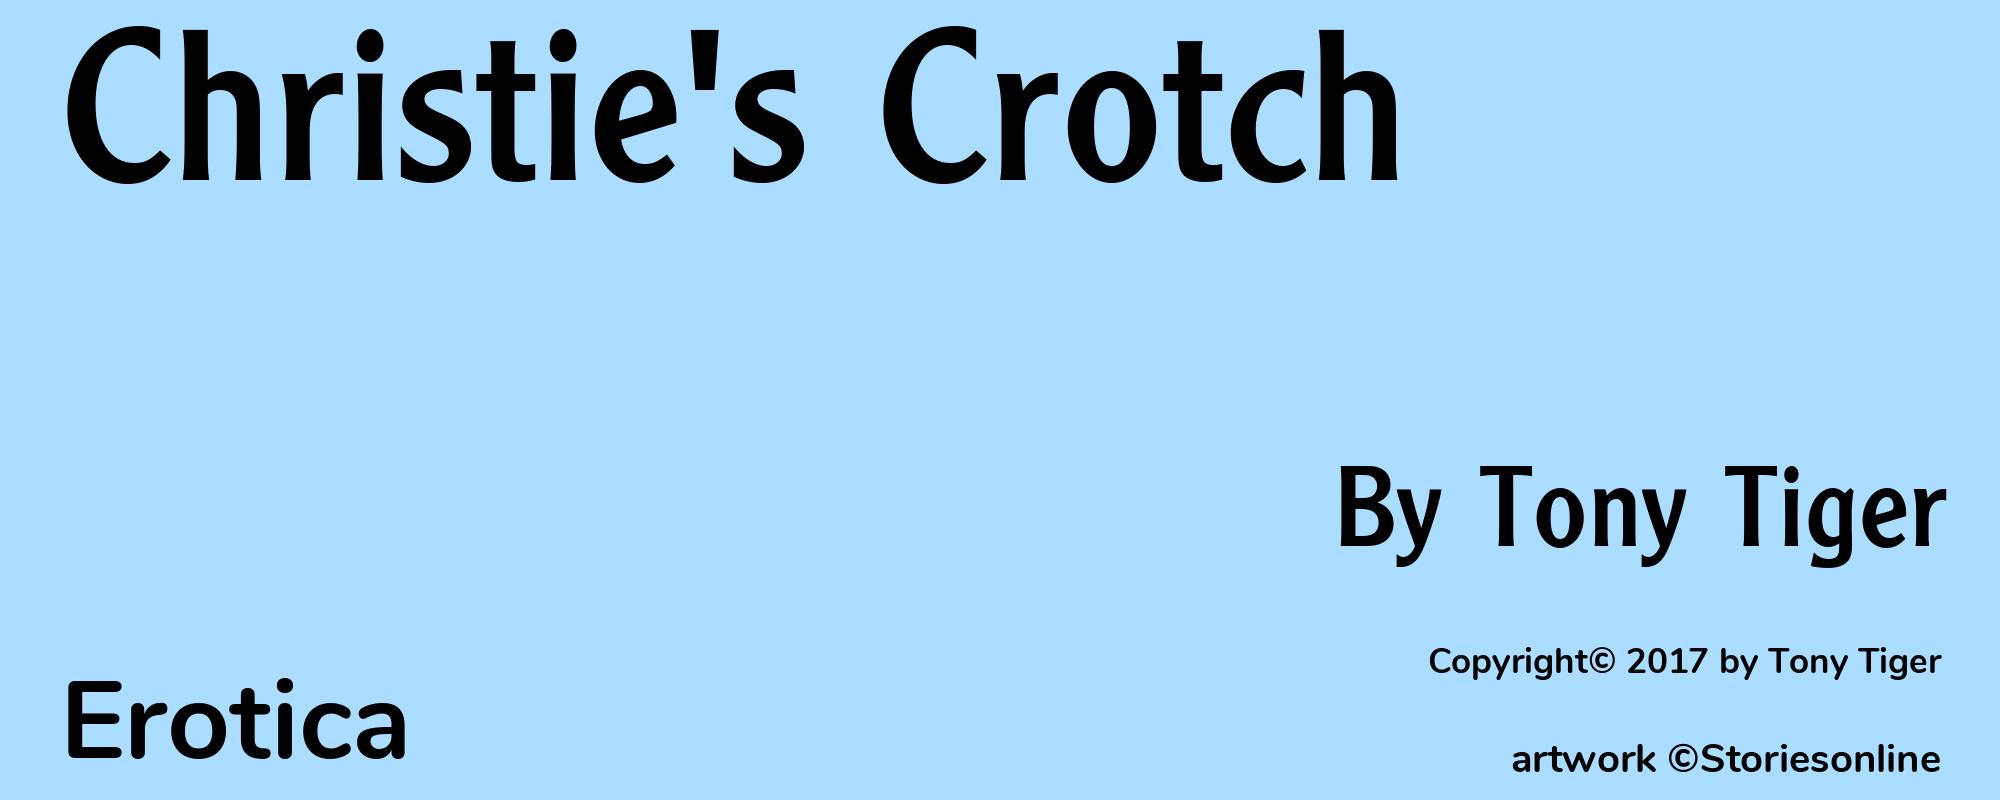 Christie's Crotch - Cover